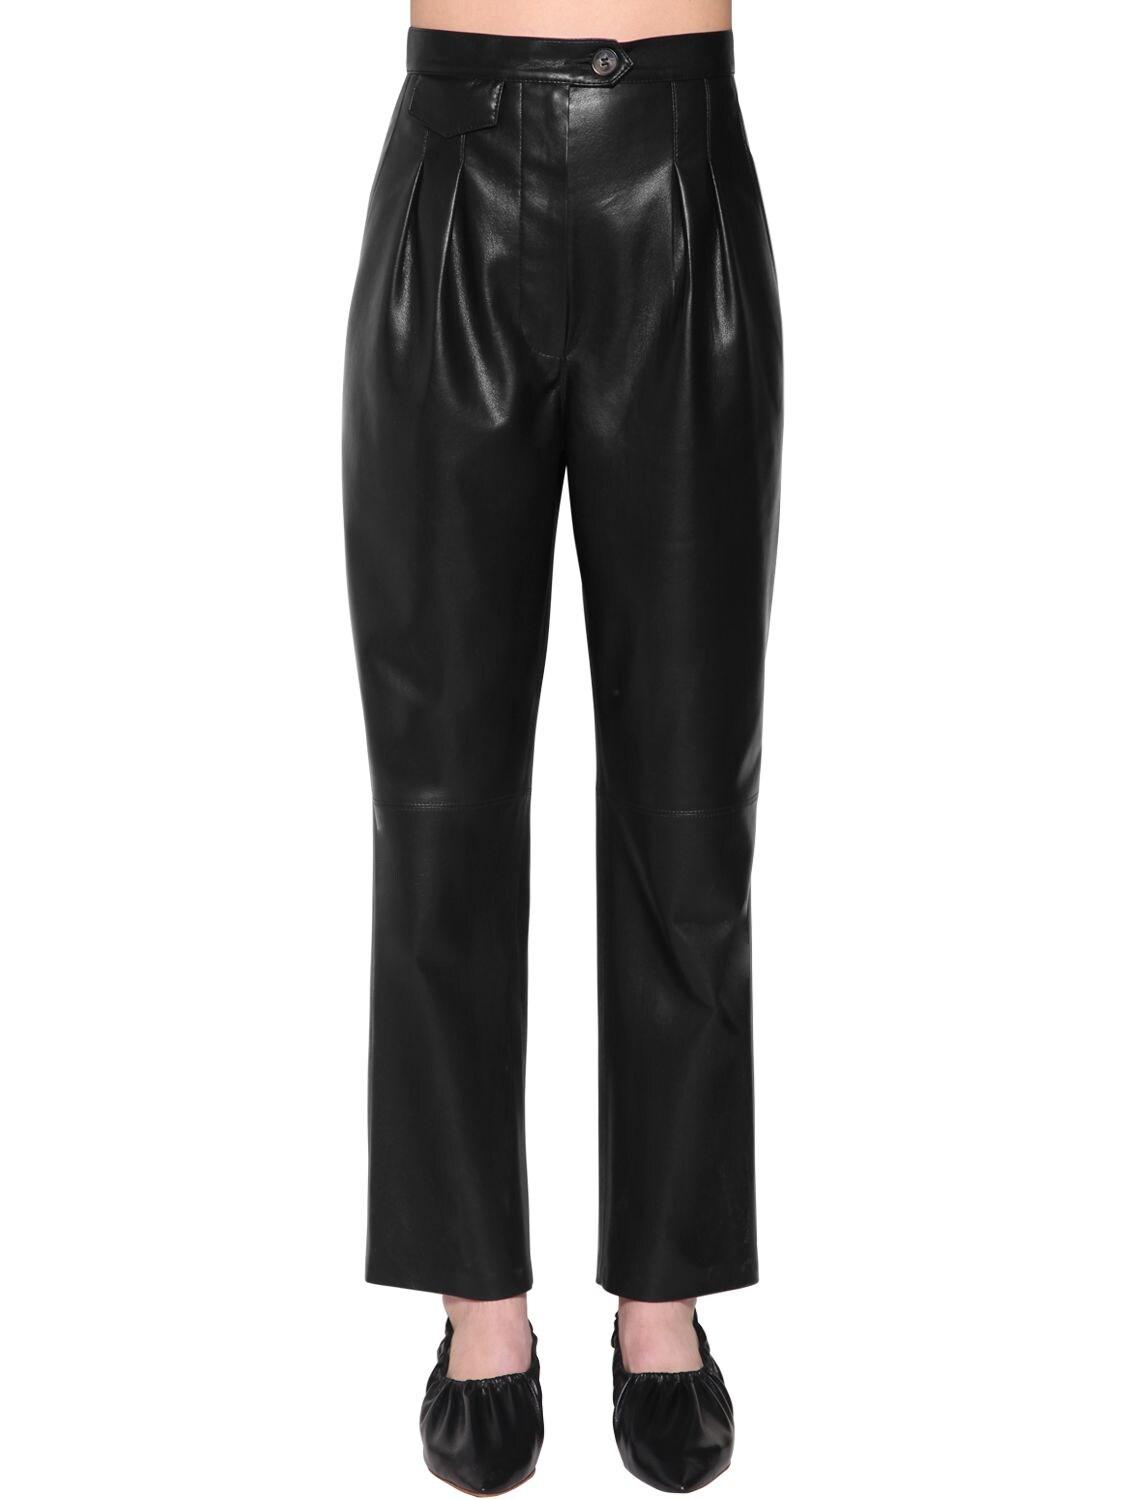 Nanushka Mitsu High Rise Faux Leather Pants in Black - Lyst